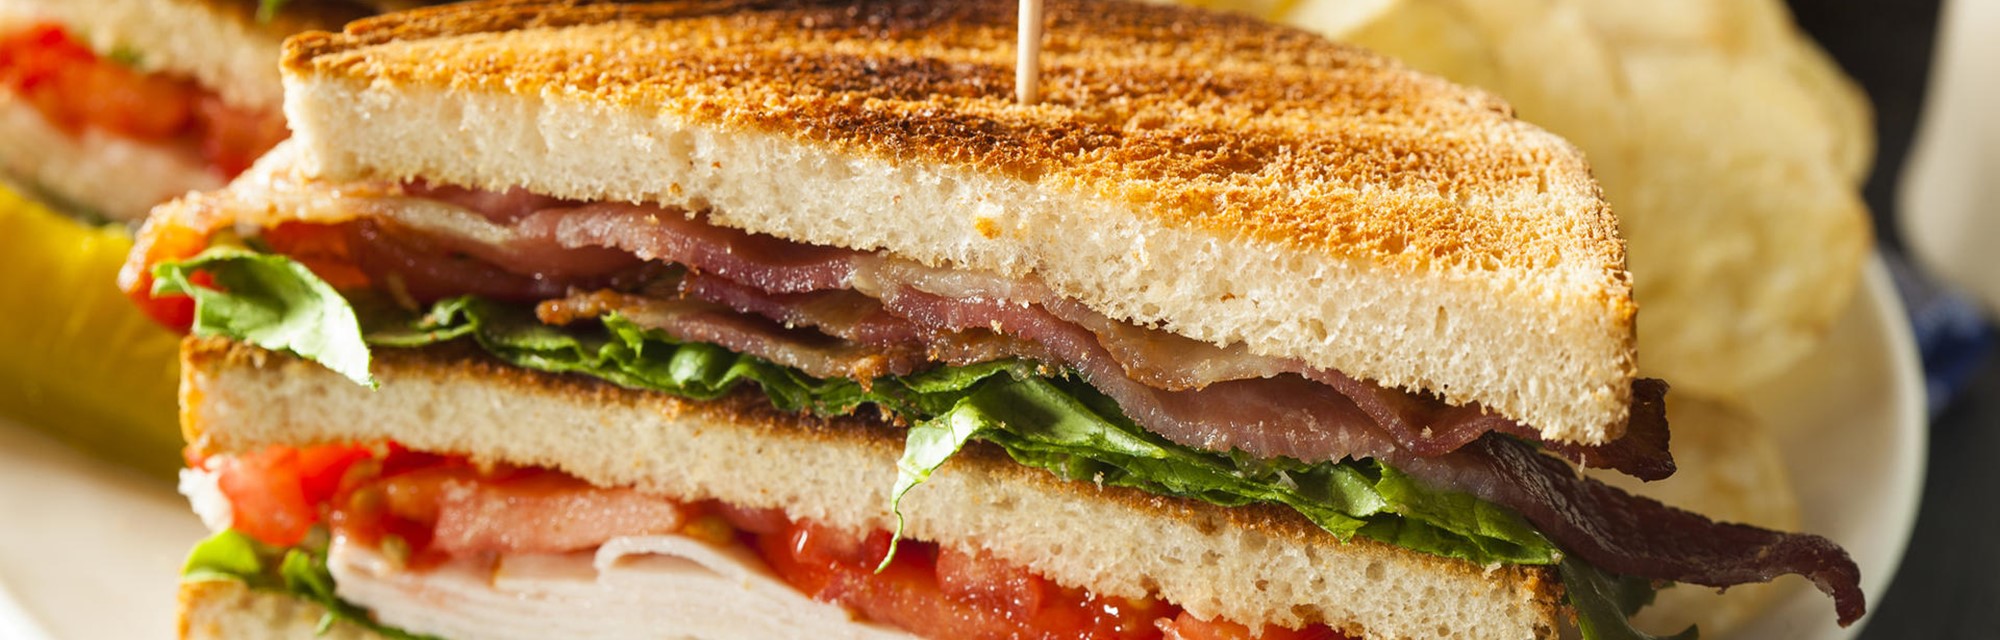 Super-stacked club sandwich